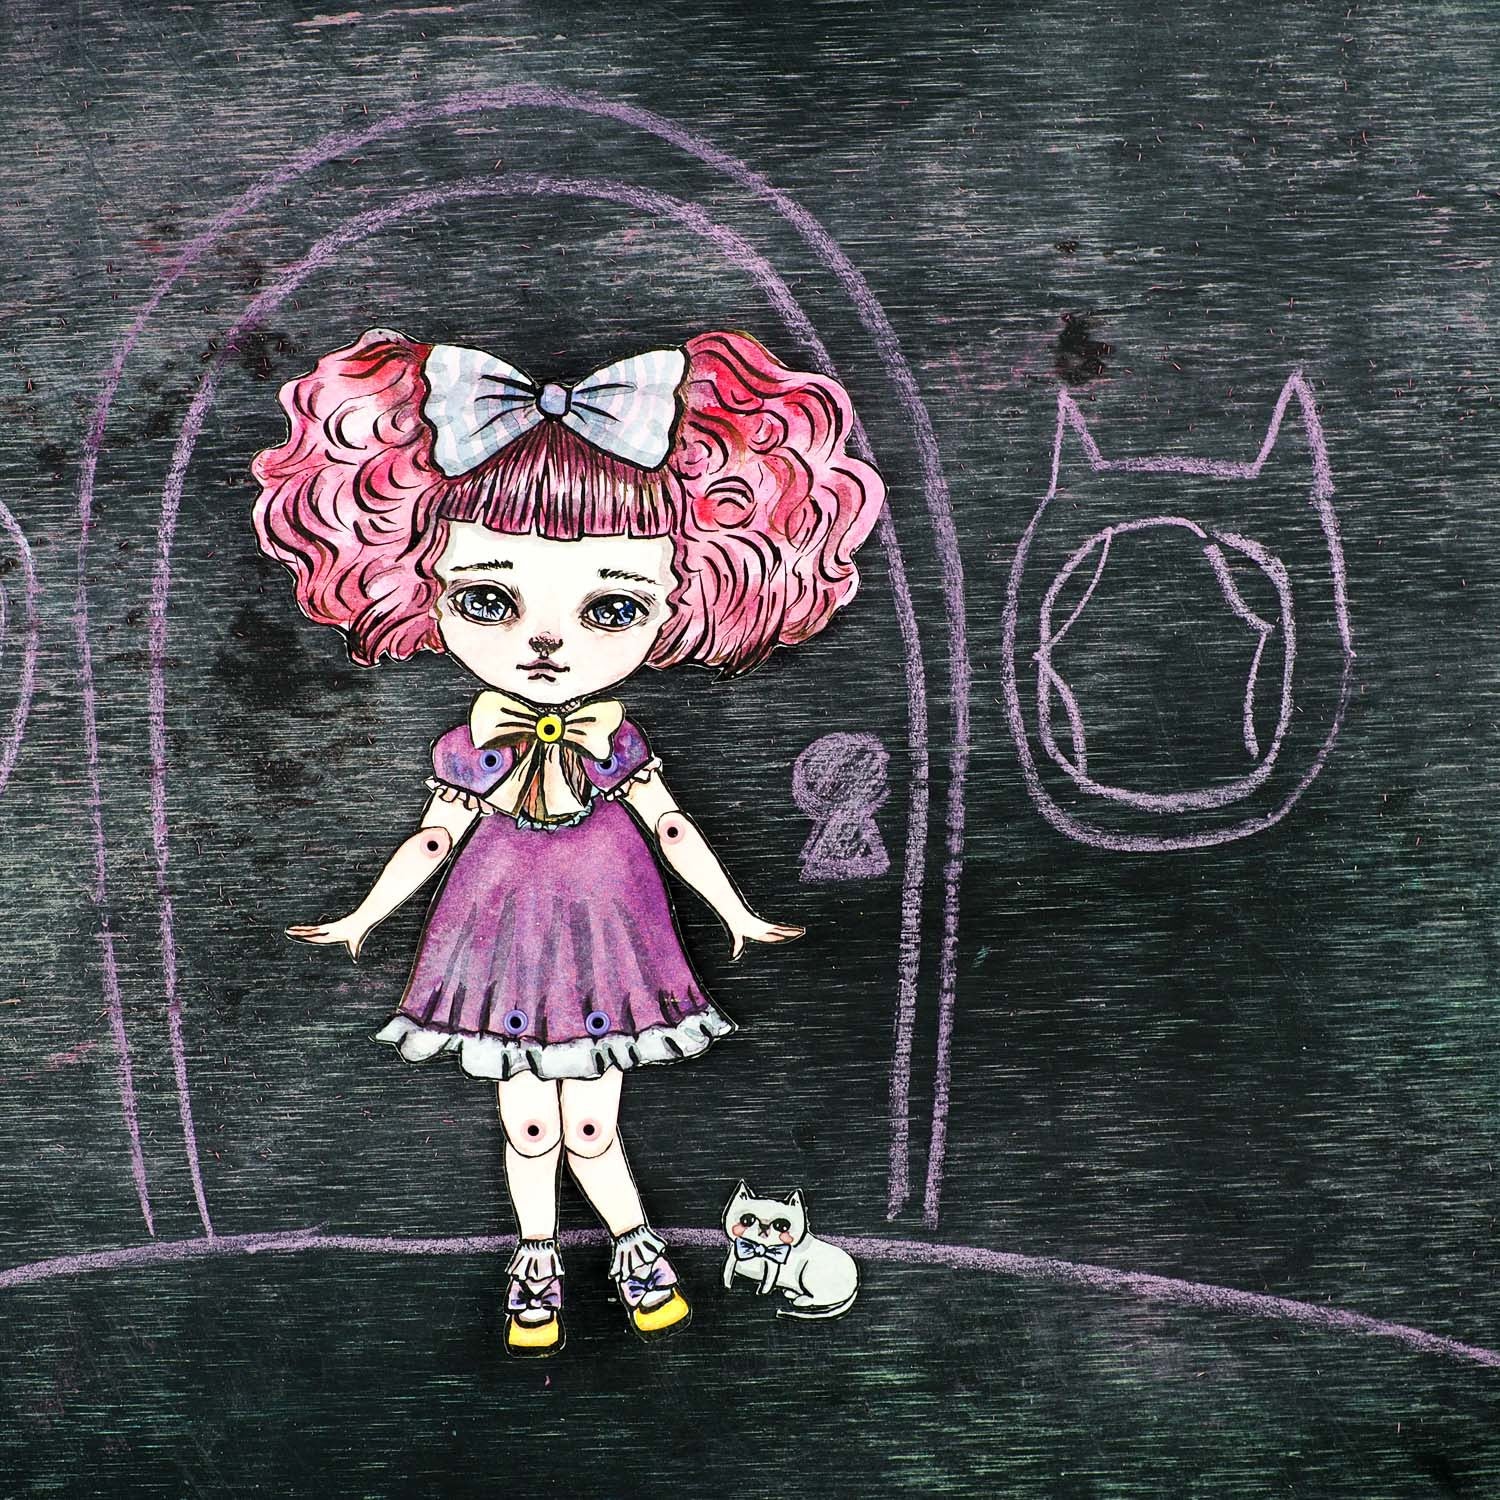 Kawaii bubble bum pink hair watercolor girl by Danita. Perfect gift for cat and animal pet lovers.